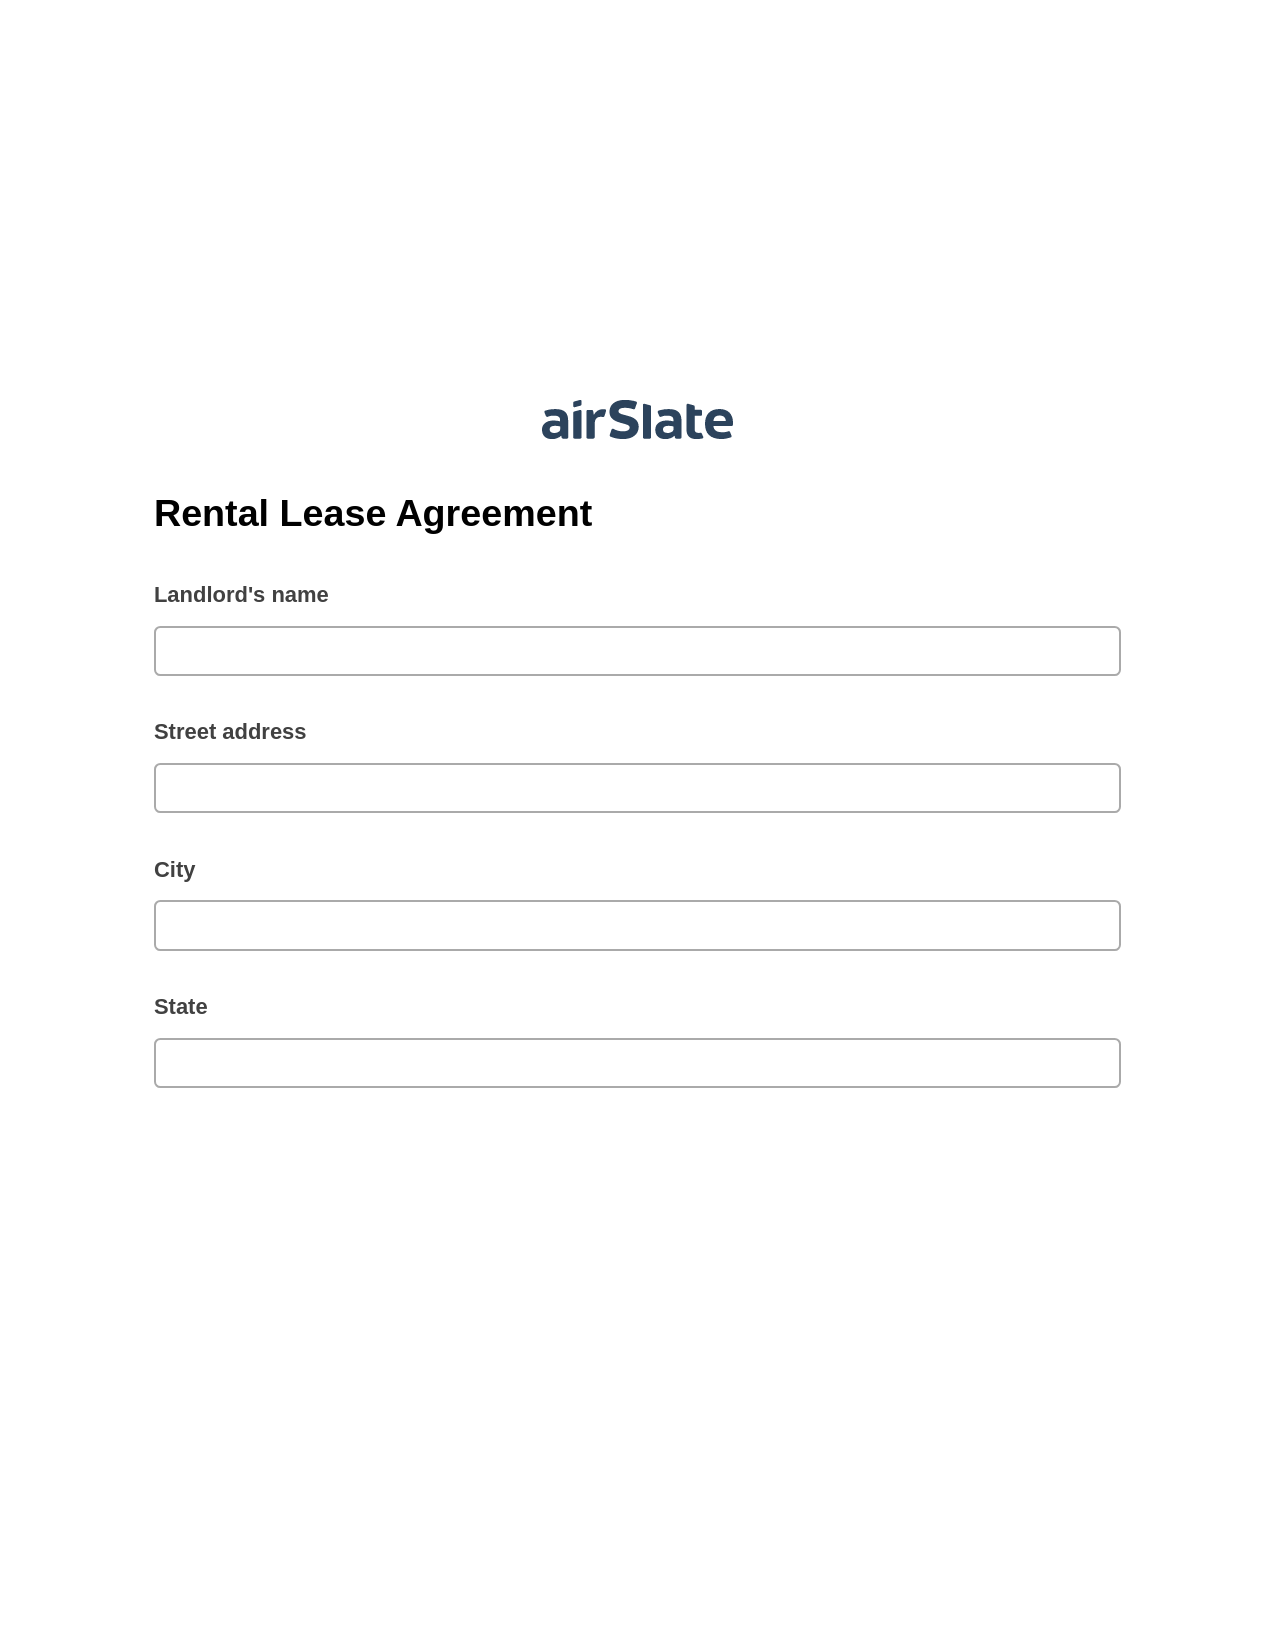 Rental Lease Agreement Pre-fill from Google Sheet Dropdown Options Bot, Create Slate every Google Sheet Update Bot, Dropbox Bot